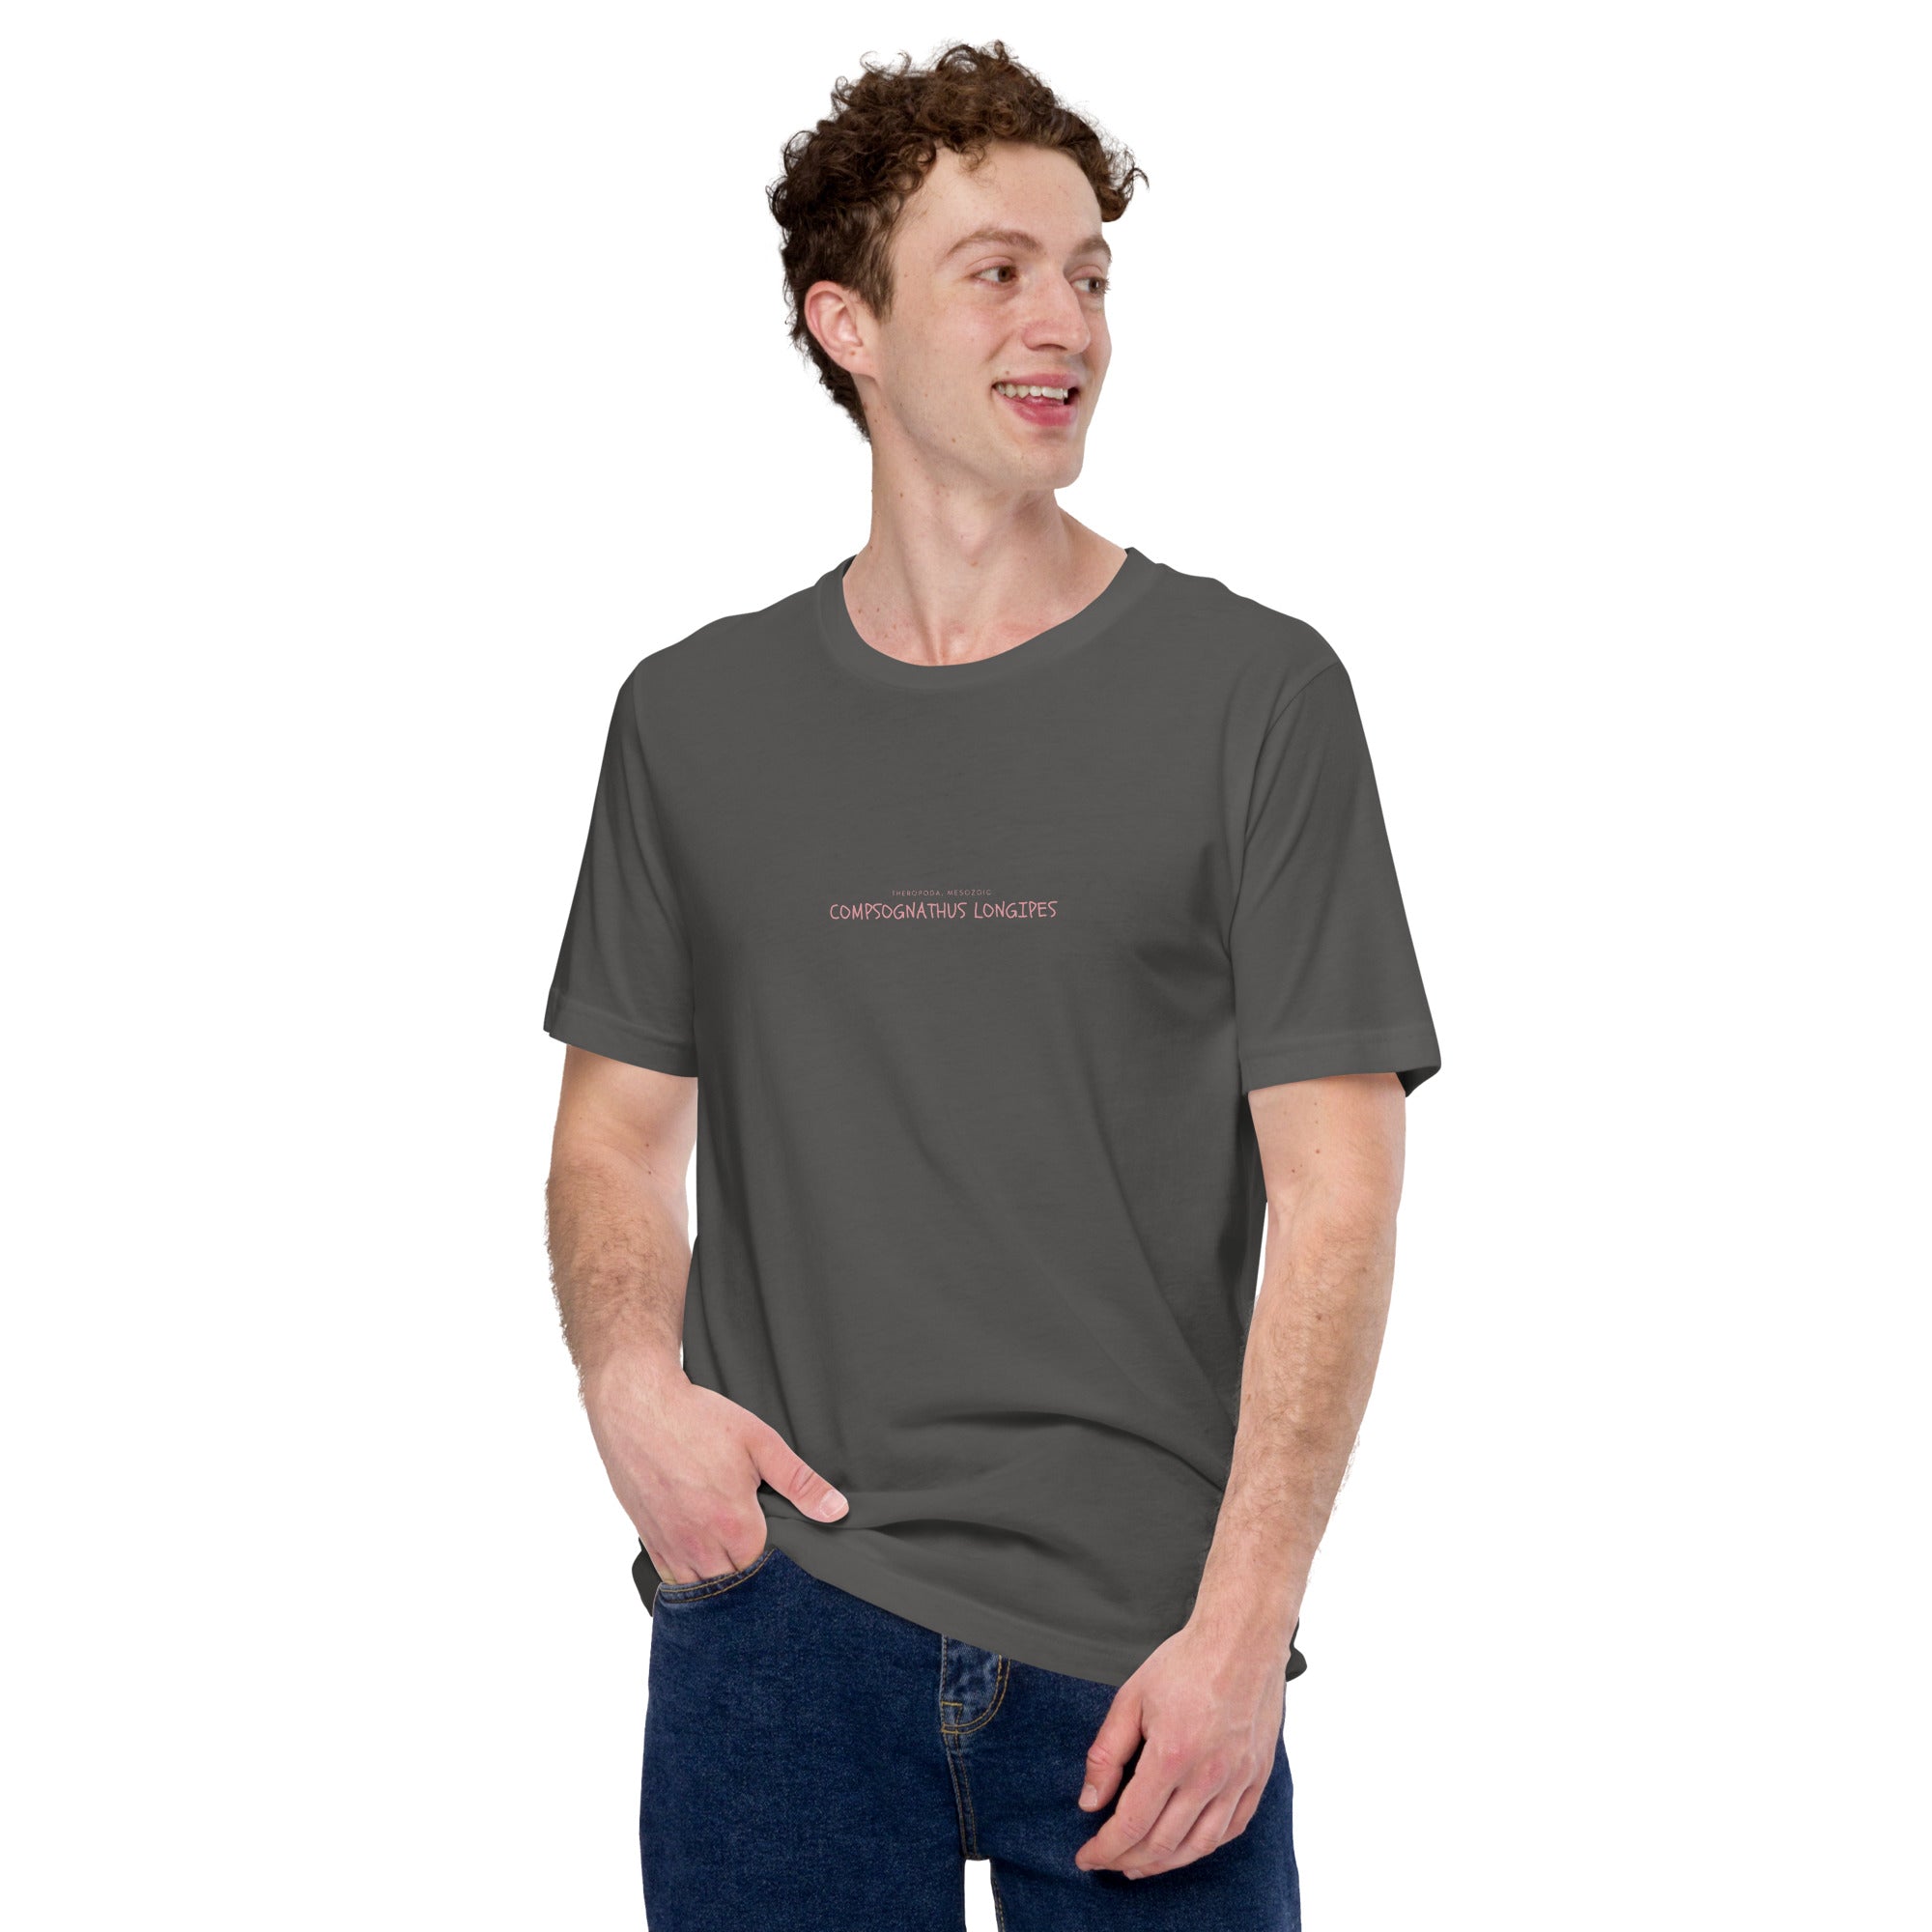 Camiseta unisex con texto "Compsognathus longipes"